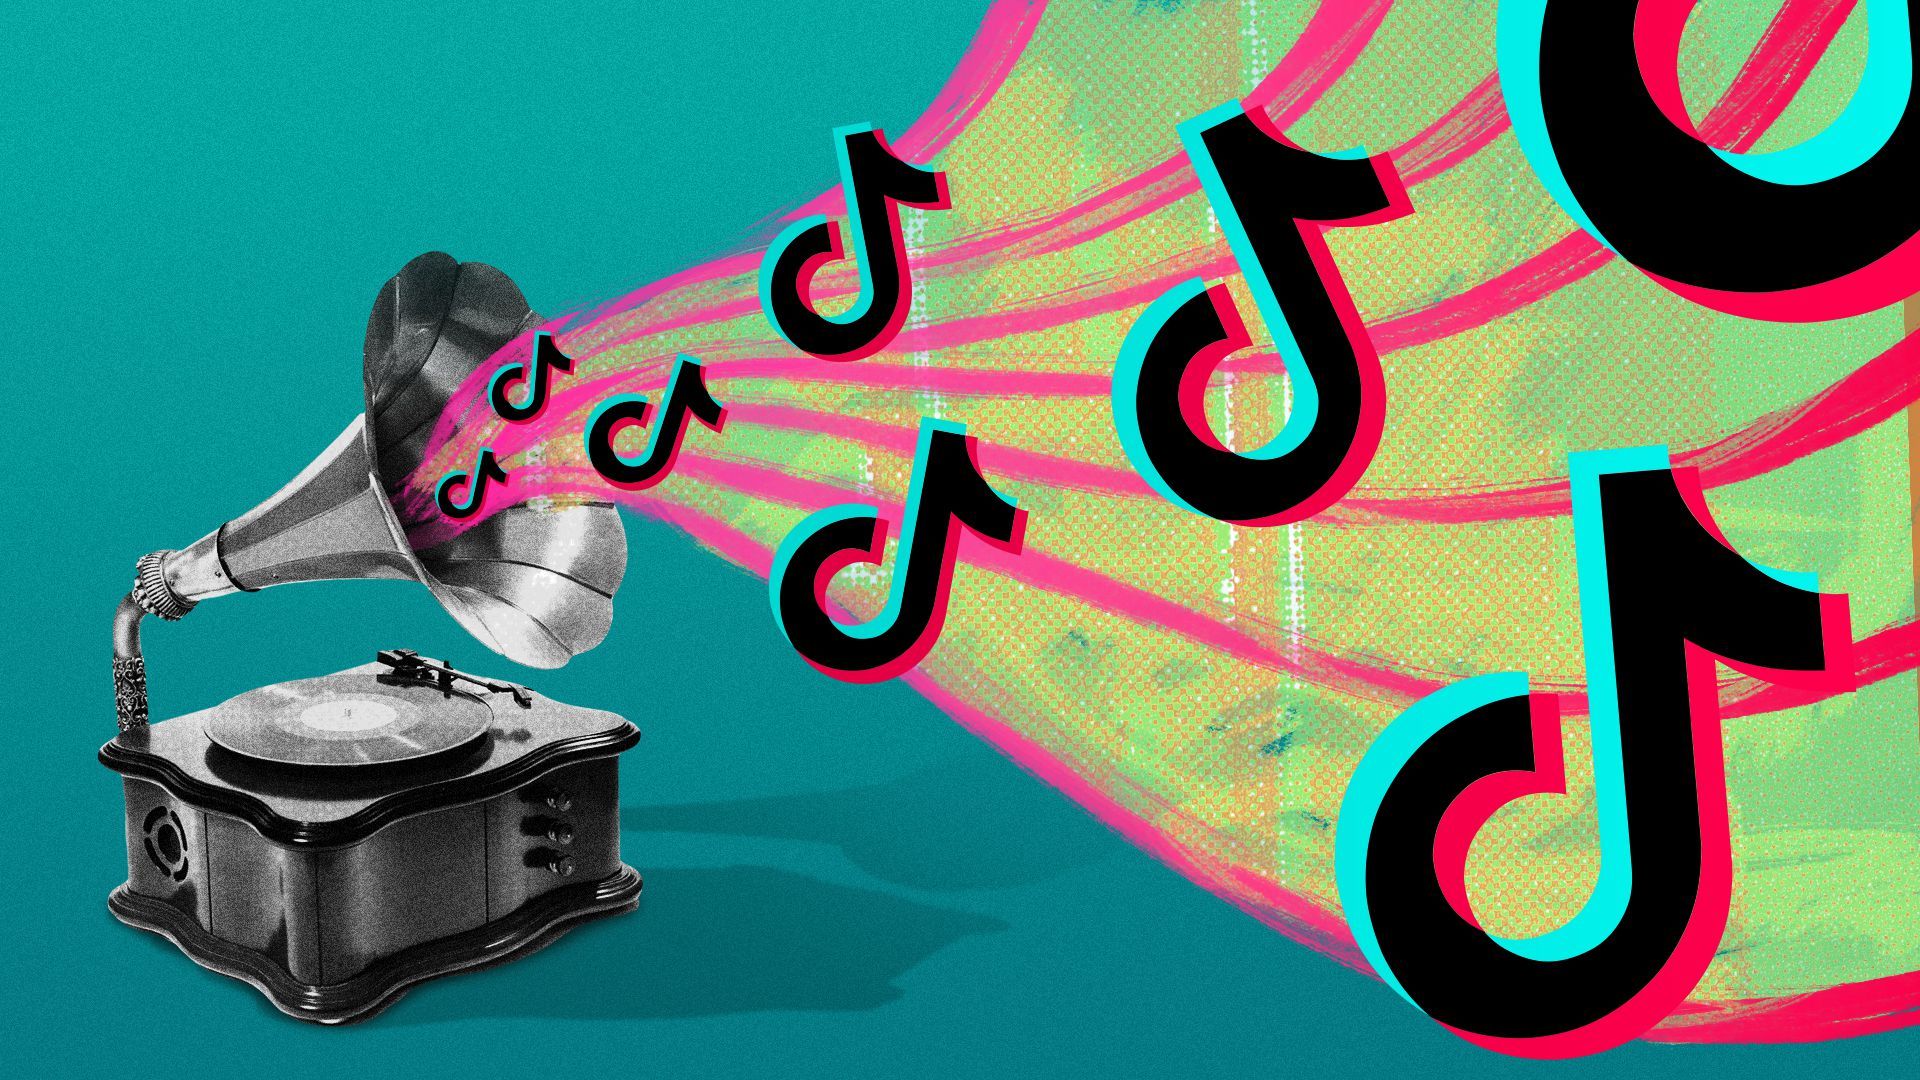 Illustration of a gramophone playing music with Tik Tok's logo.